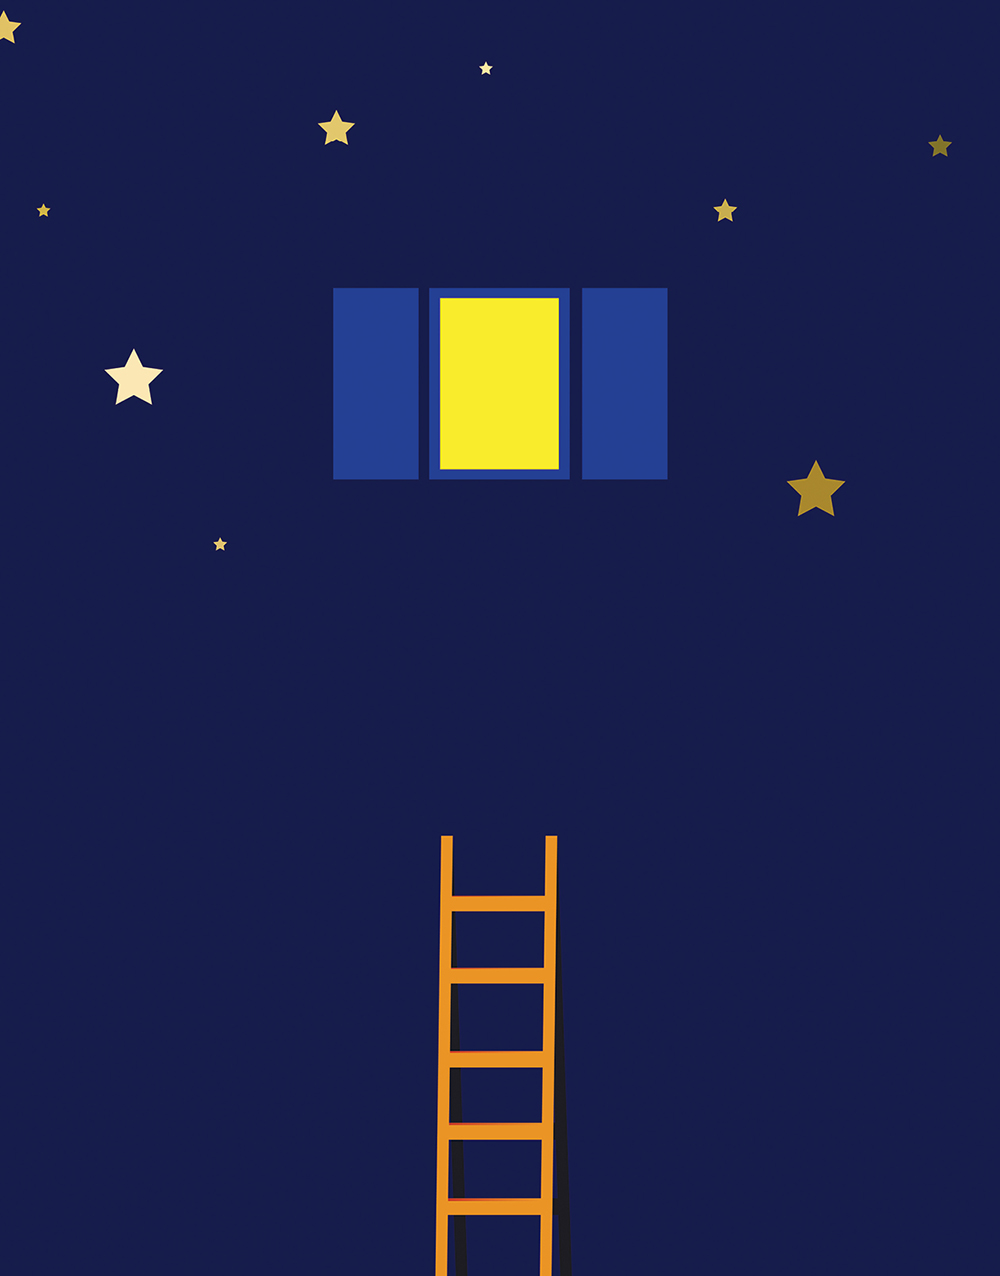 Minimalist illustration of a ladder under an open window